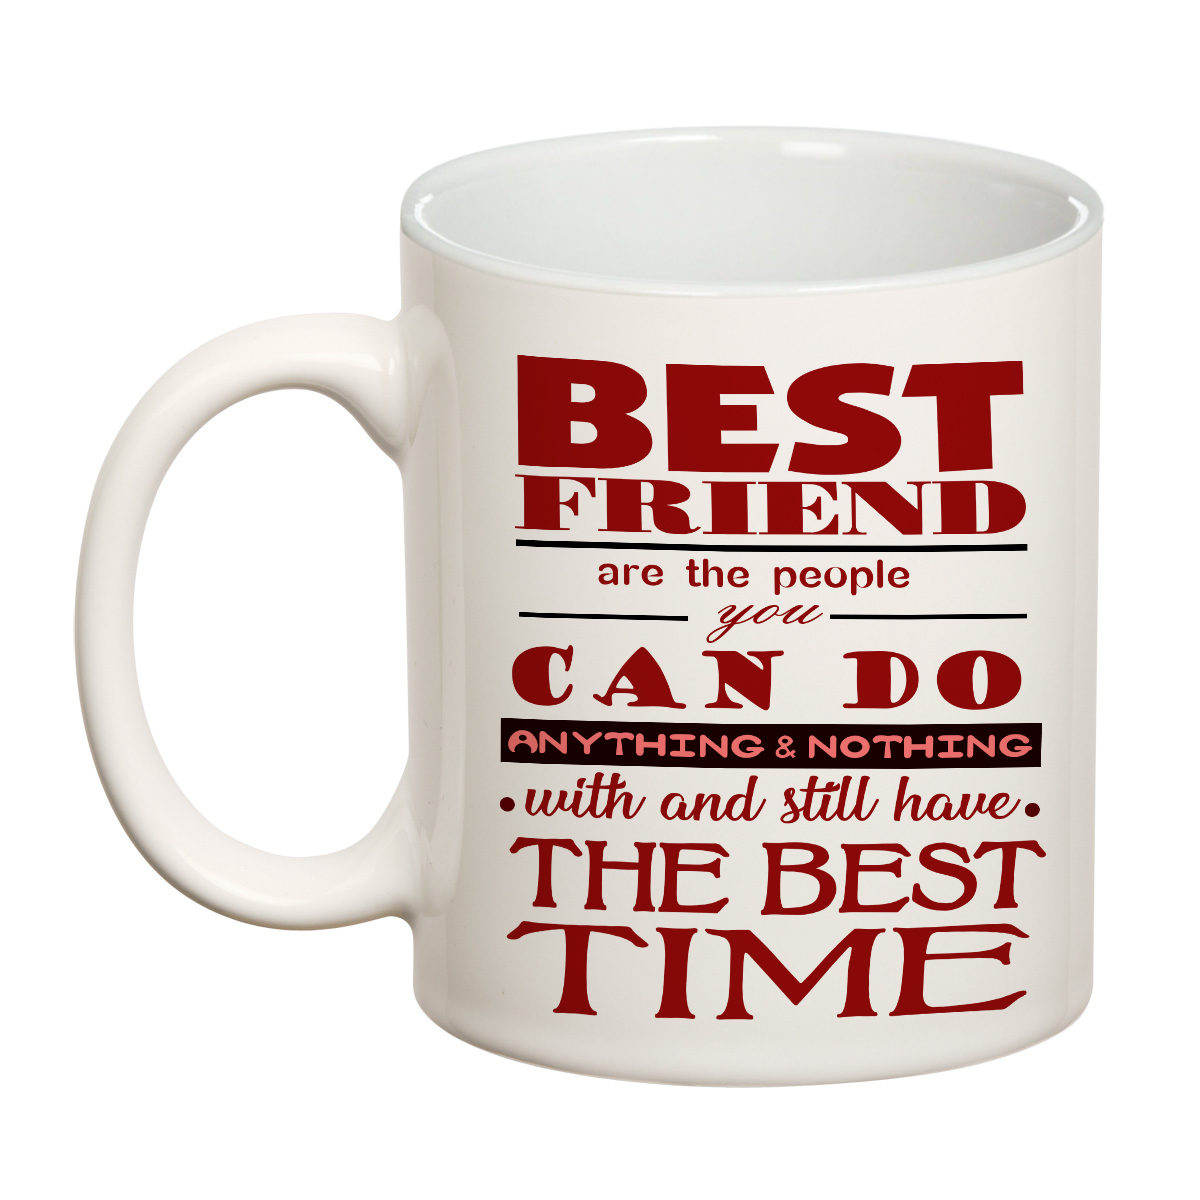 ORKA Coffee Mug Quotes Printed (Best Friend)Theme 11 Oz   